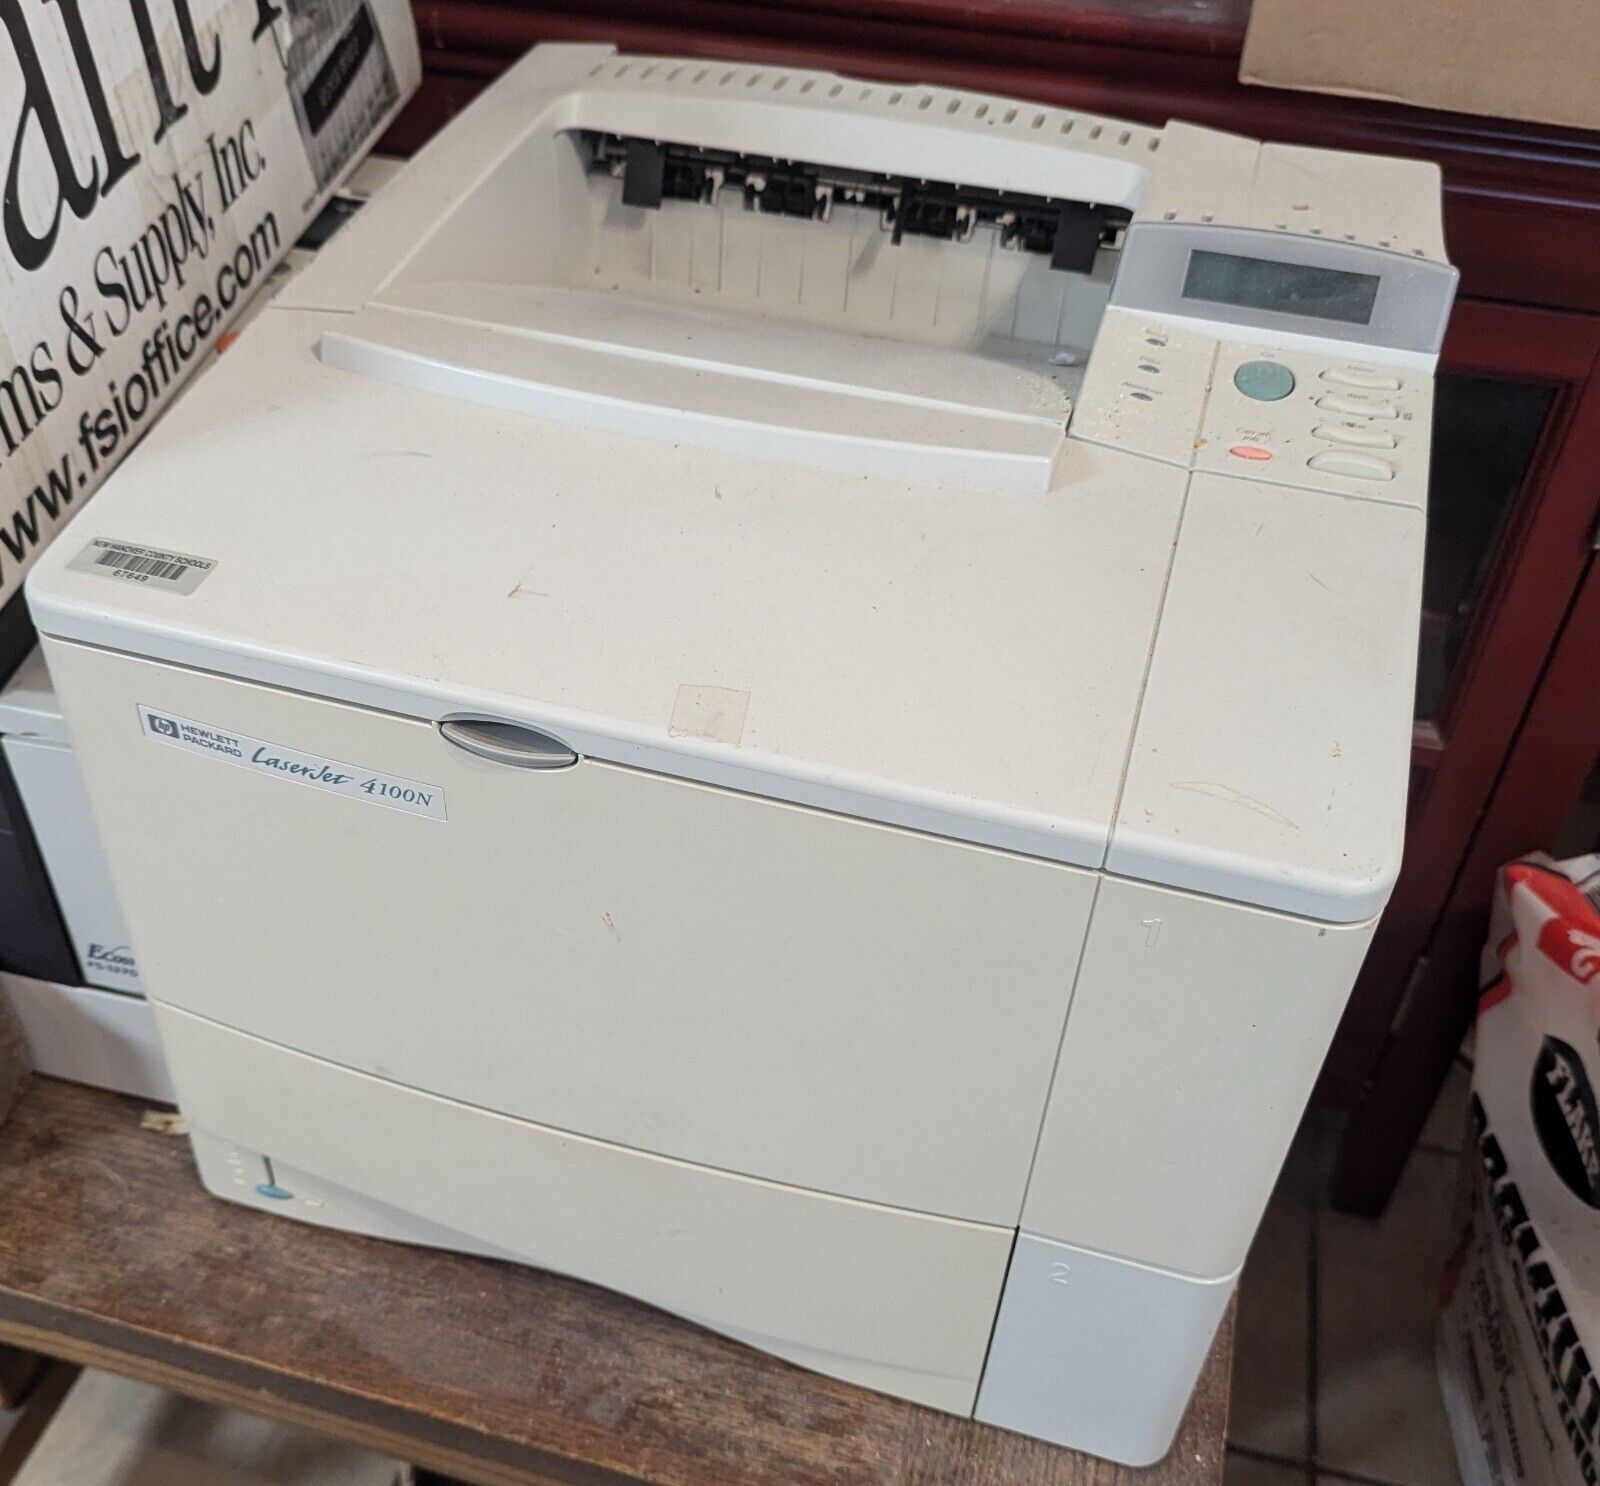 HP LaserJet 4100N Workgroup Laser Printer